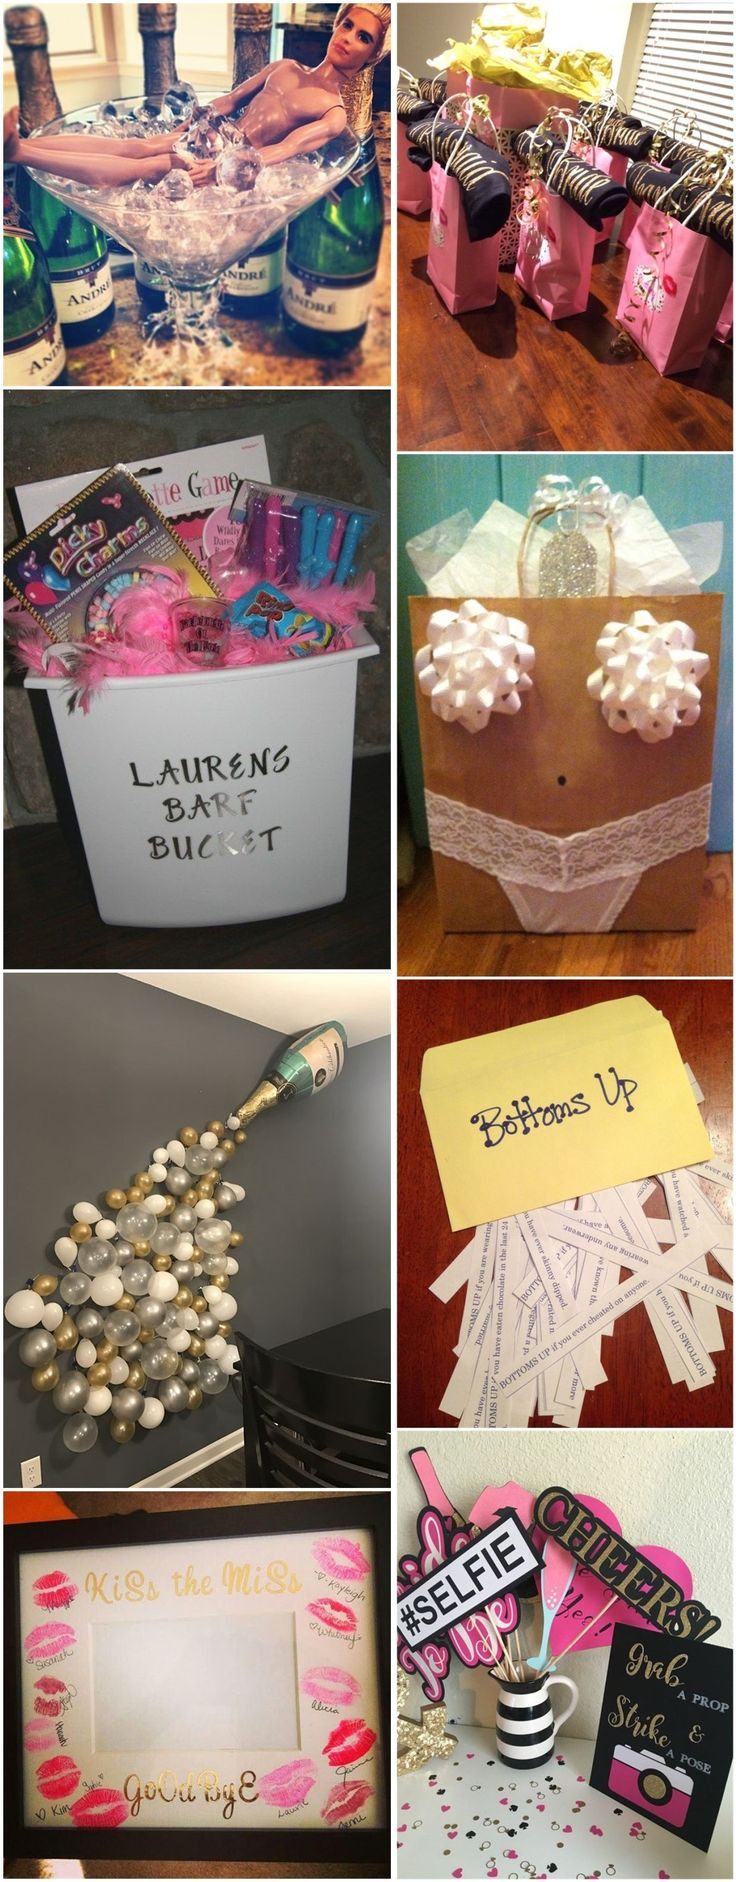 Good Bachelorette Party Ideas
 Best 25 Bachelorette ideas ideas on Pinterest